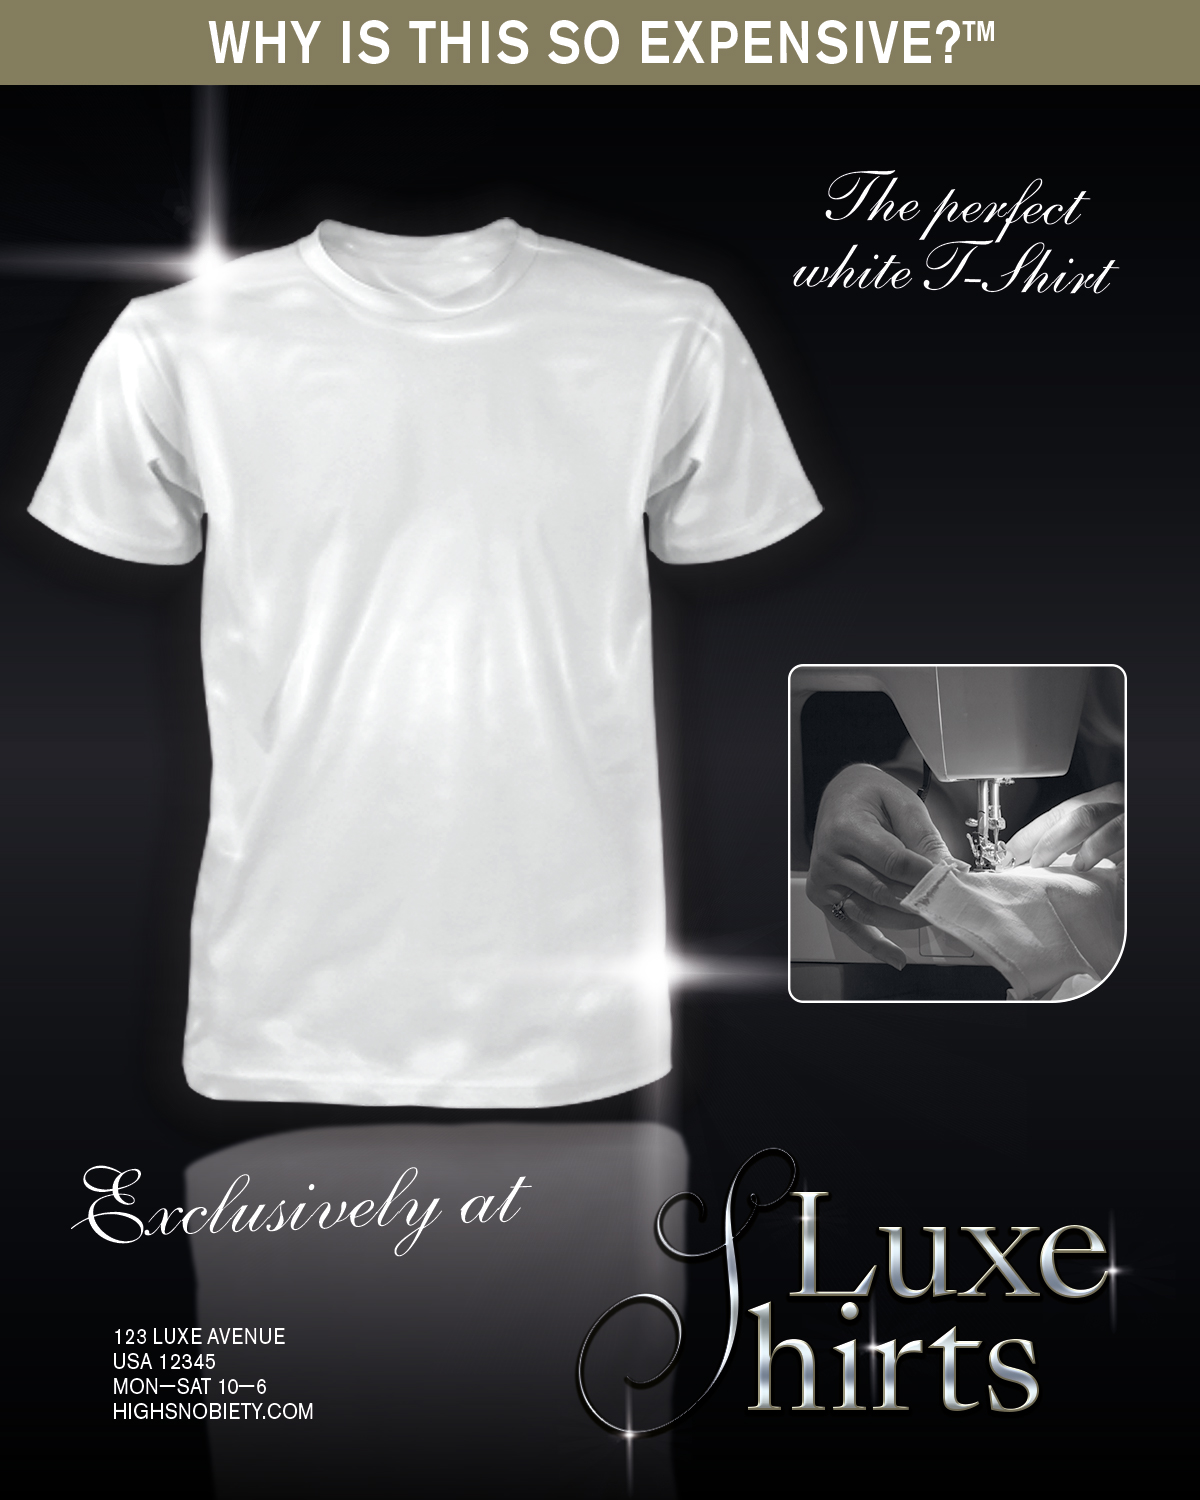 NEW FASHION] Louis Vuitton Premium Luxury Brand T-Shirt Outfit For Men Women